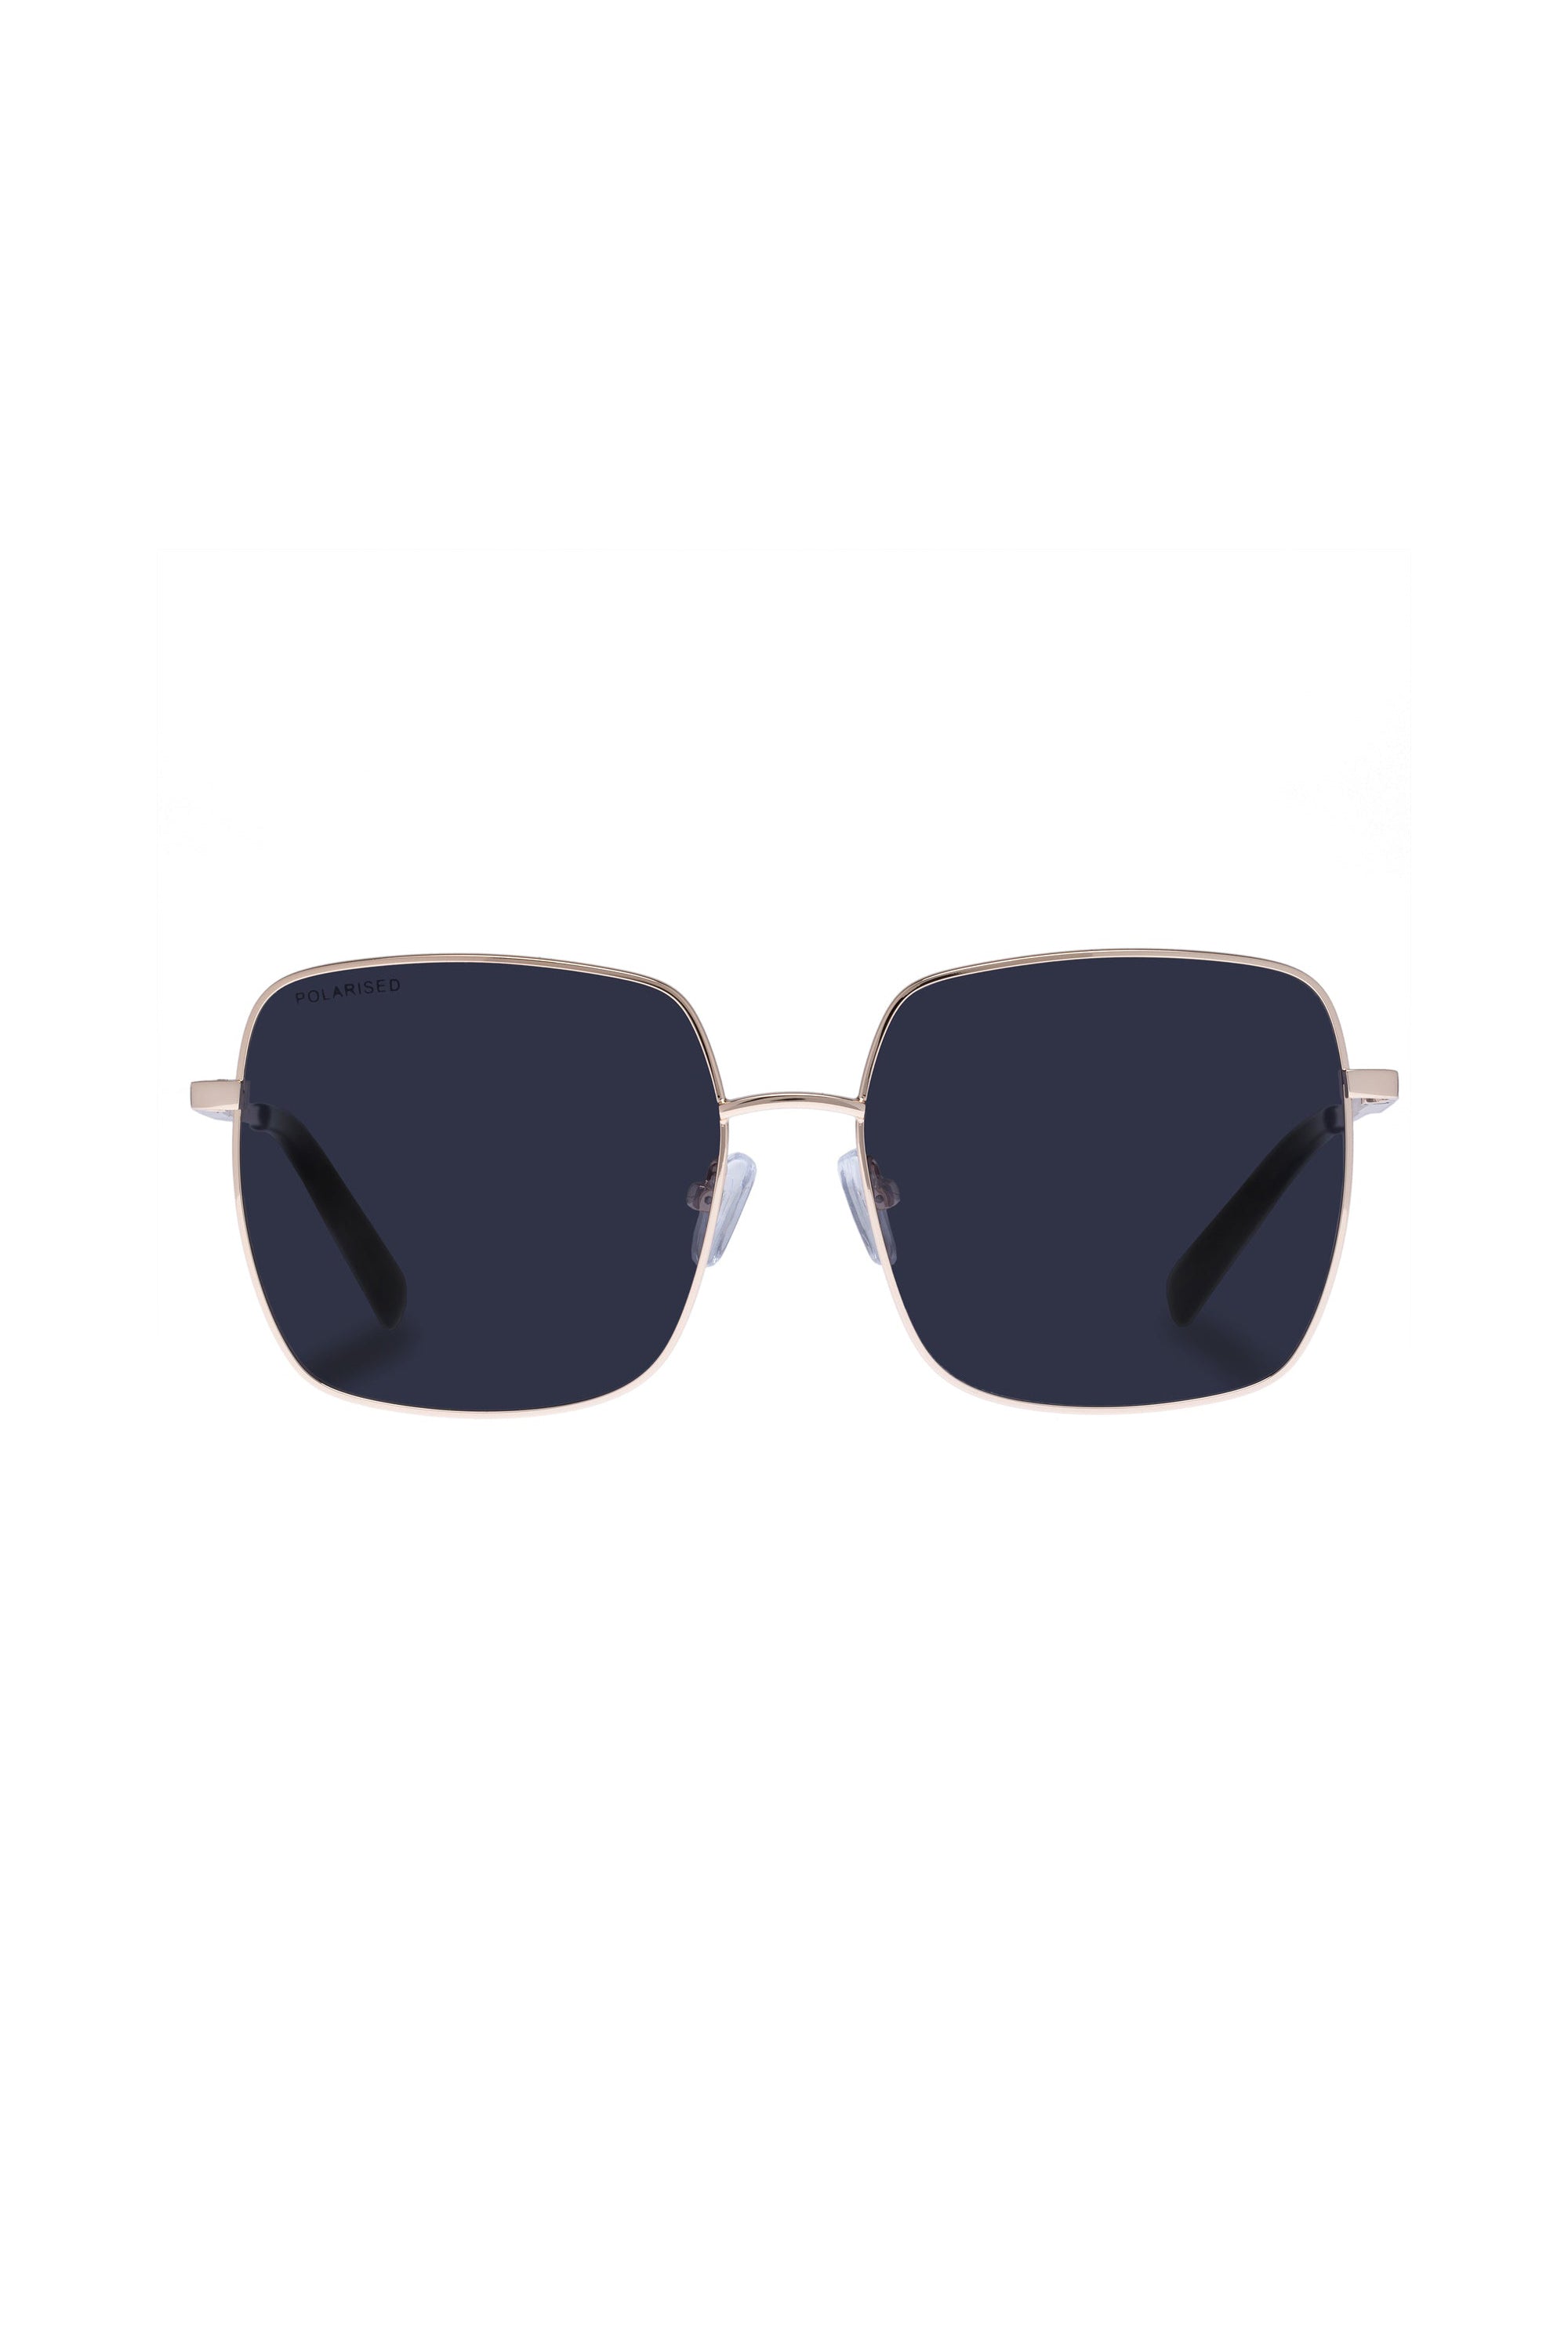 Le Specs The Cherished Sunglasses - Gold w/ Smoke Mono *Polarized* - RUM Amsterdam